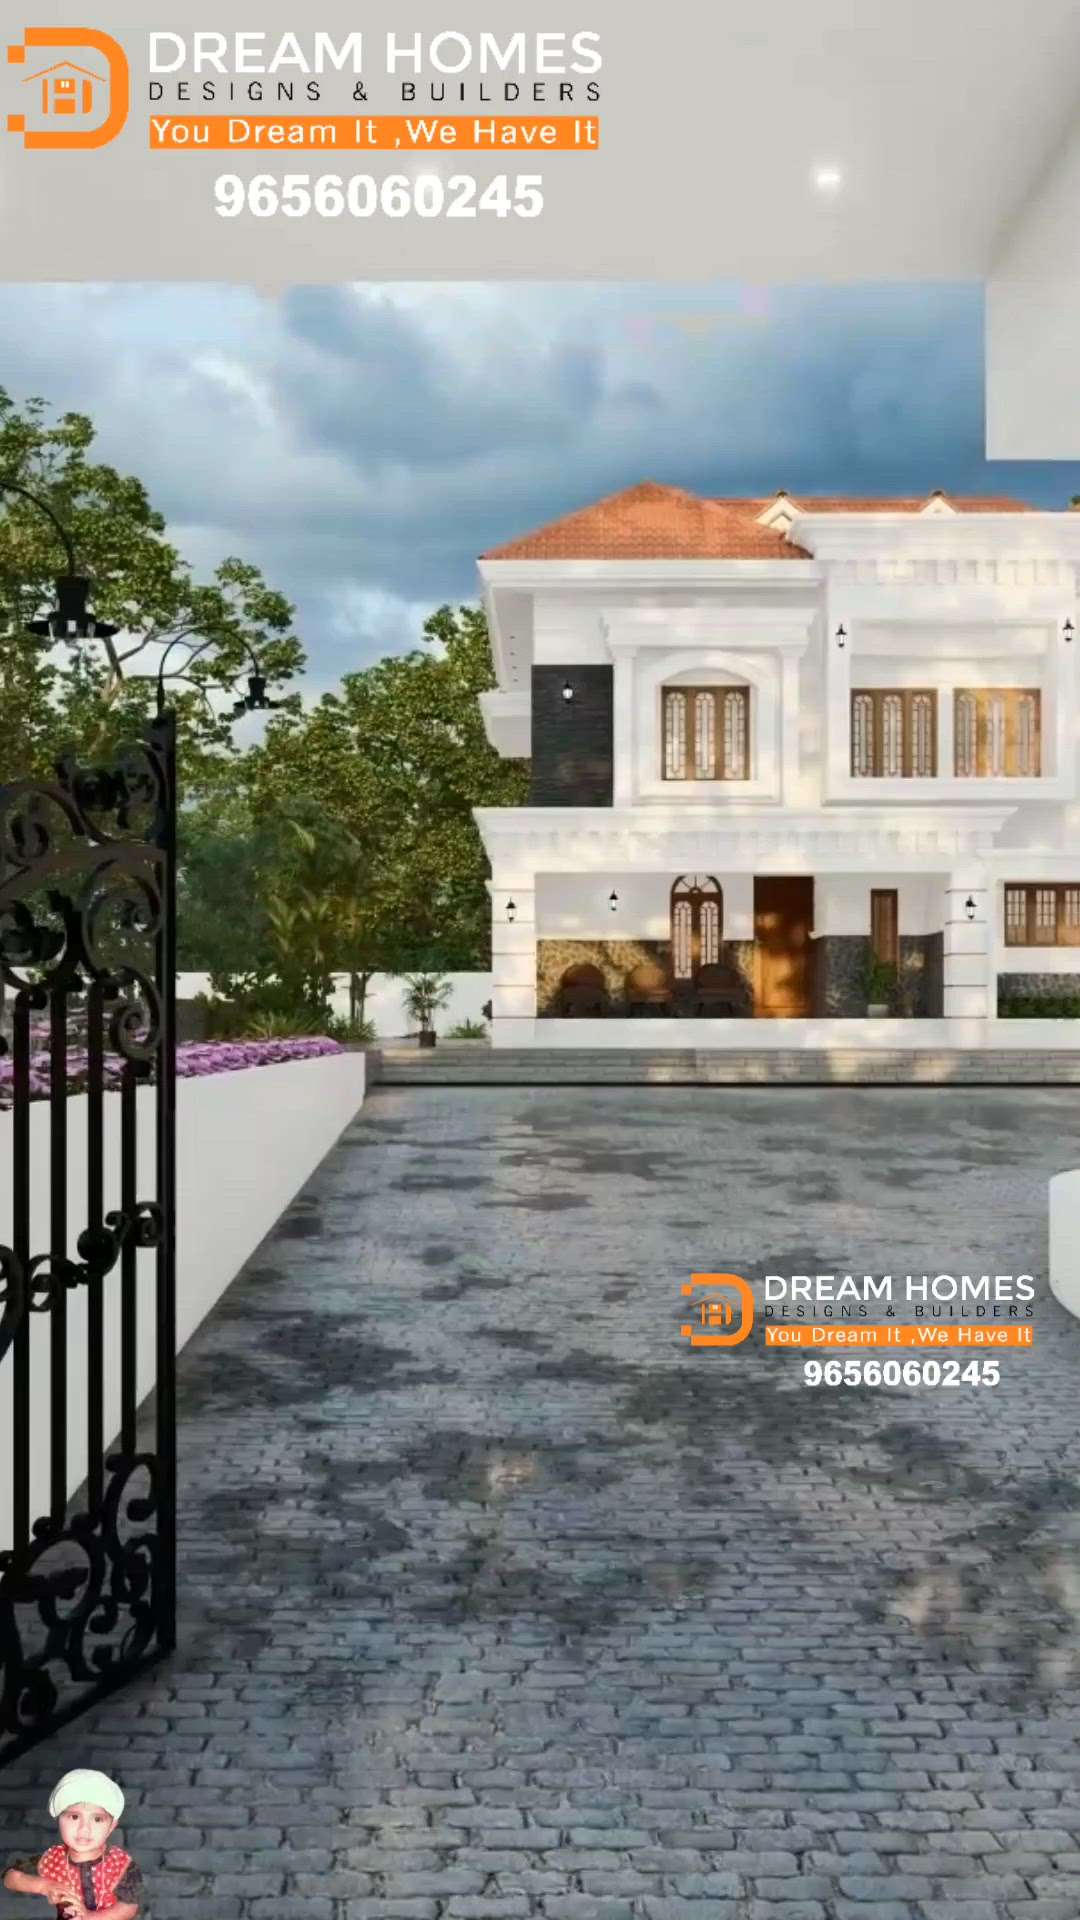 "DREAM HOMES DESIGNS & BUILDERS "
            You Dream It, We Have It'

       "Kerala's No 1 Architect for Traditional Home,

"🎉🙏മധുരവും തിക്തവും ഉപ്പും ചവർപ്പും എരിവും പുളിയും ഇടകലർന്ന അനുഭവങ്ങൾ നിറഞ്ഞതാവാം നമ്മുടെ ഗതകാലങ്ങൾ. അവയെന്തുമാവട്ടെ, വരുംകാലങ്ങളെ കുറിച്ചുള്ള ശുഭചിന്തകളാണ് ഇന്ന് പ്രസക്തമാവുന്നത്. 
യാത്ര തുടരാം മുന്നോട്ട്.
ആത്മവിശ്വാസത്തോടെ🙏🎉
ശുഭരാത്രി 🎉

#traditionalhome #traditional

"A beautiful traditional structure  will be completed only with the presence of a good Architect and pure Vasthu Sastra.

Dream Homes will always be there whenever we are needed.

We are providing service to all over India 
No Compromise on Quality, Sincerity & Efficiency.

#traditionalhome #traditional 

www.dreamhomesbuilders.com
For more info
9656060245
7902453187